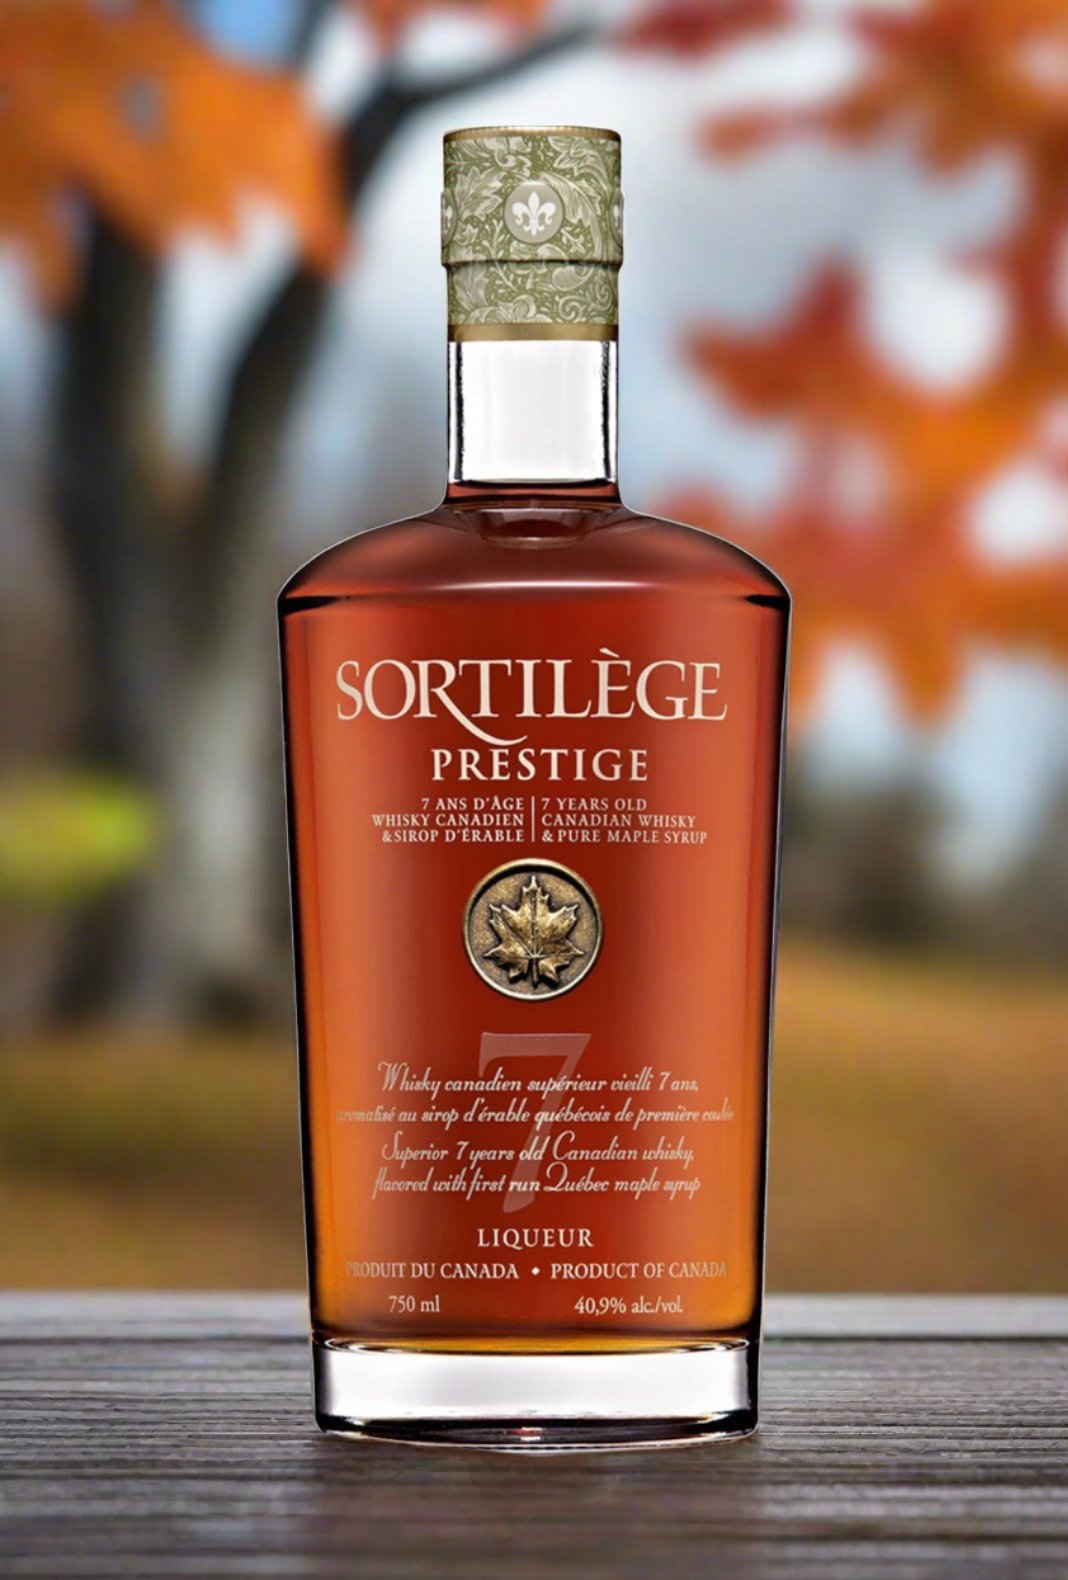 Sortilege Prestige 40.9% 750ml - Whisky - Liquor Wine Cave